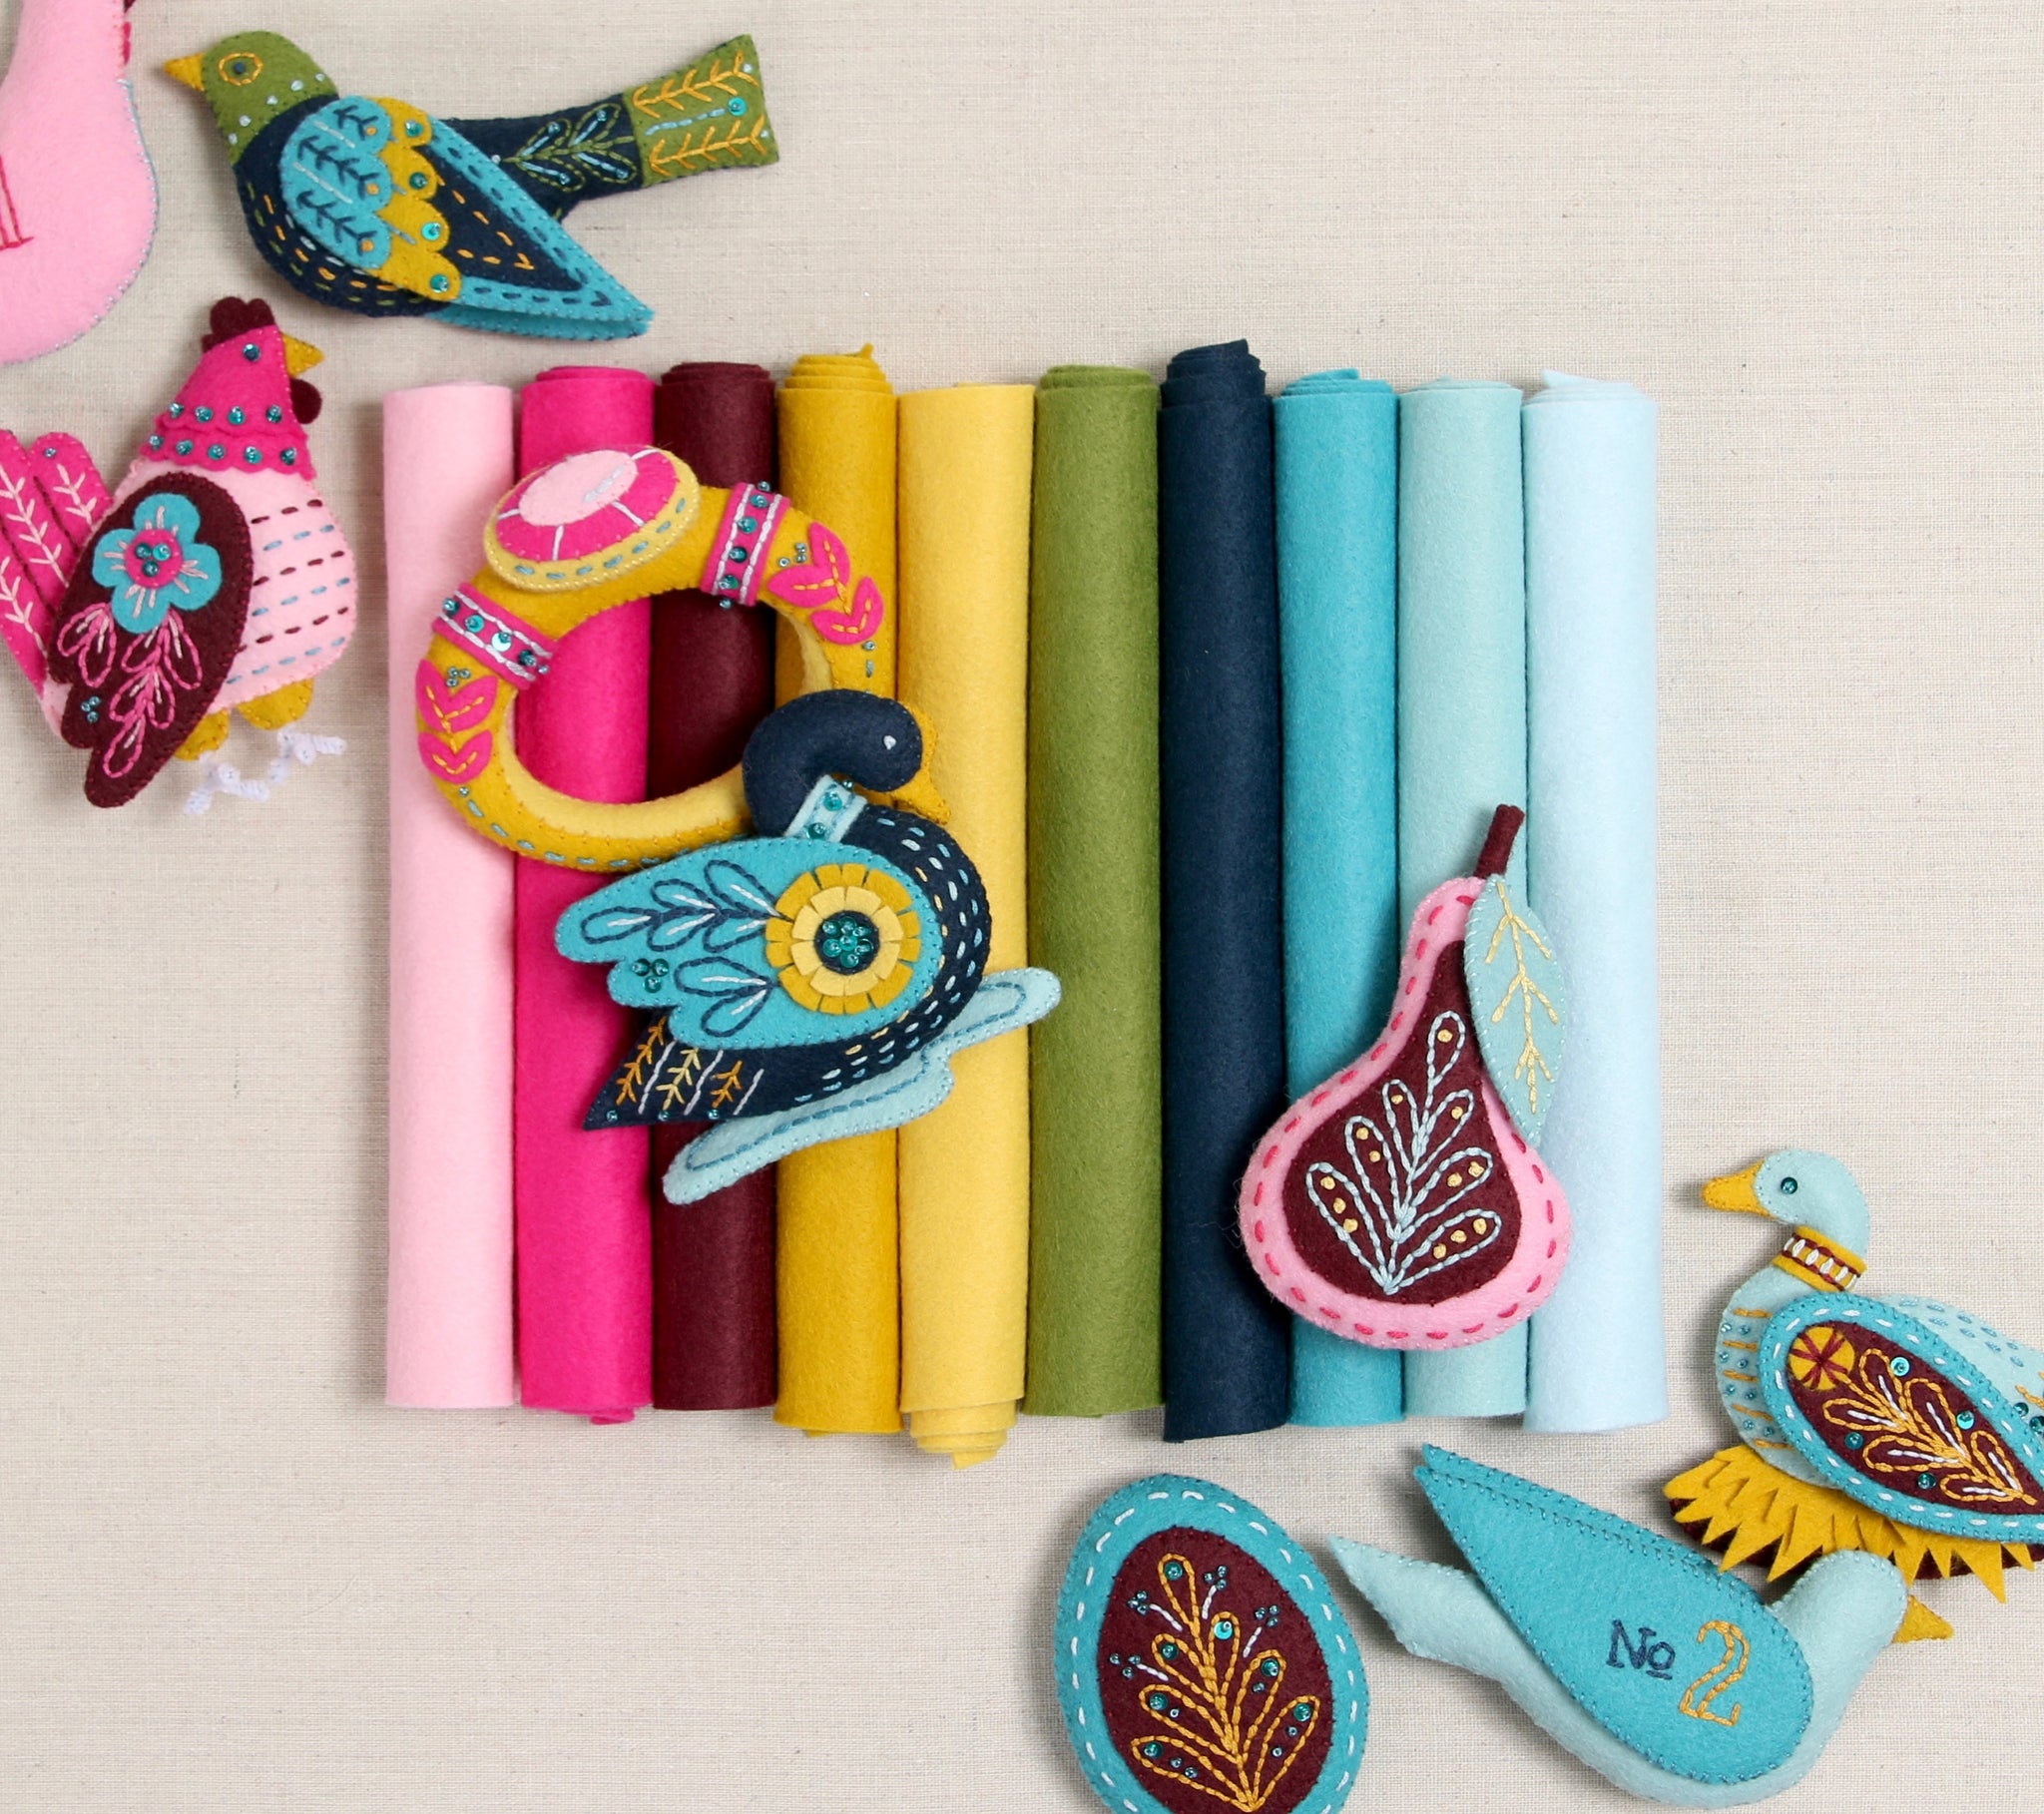 Set of 6 Handmade Felt Ornaments in Multicolor Palette - Merry